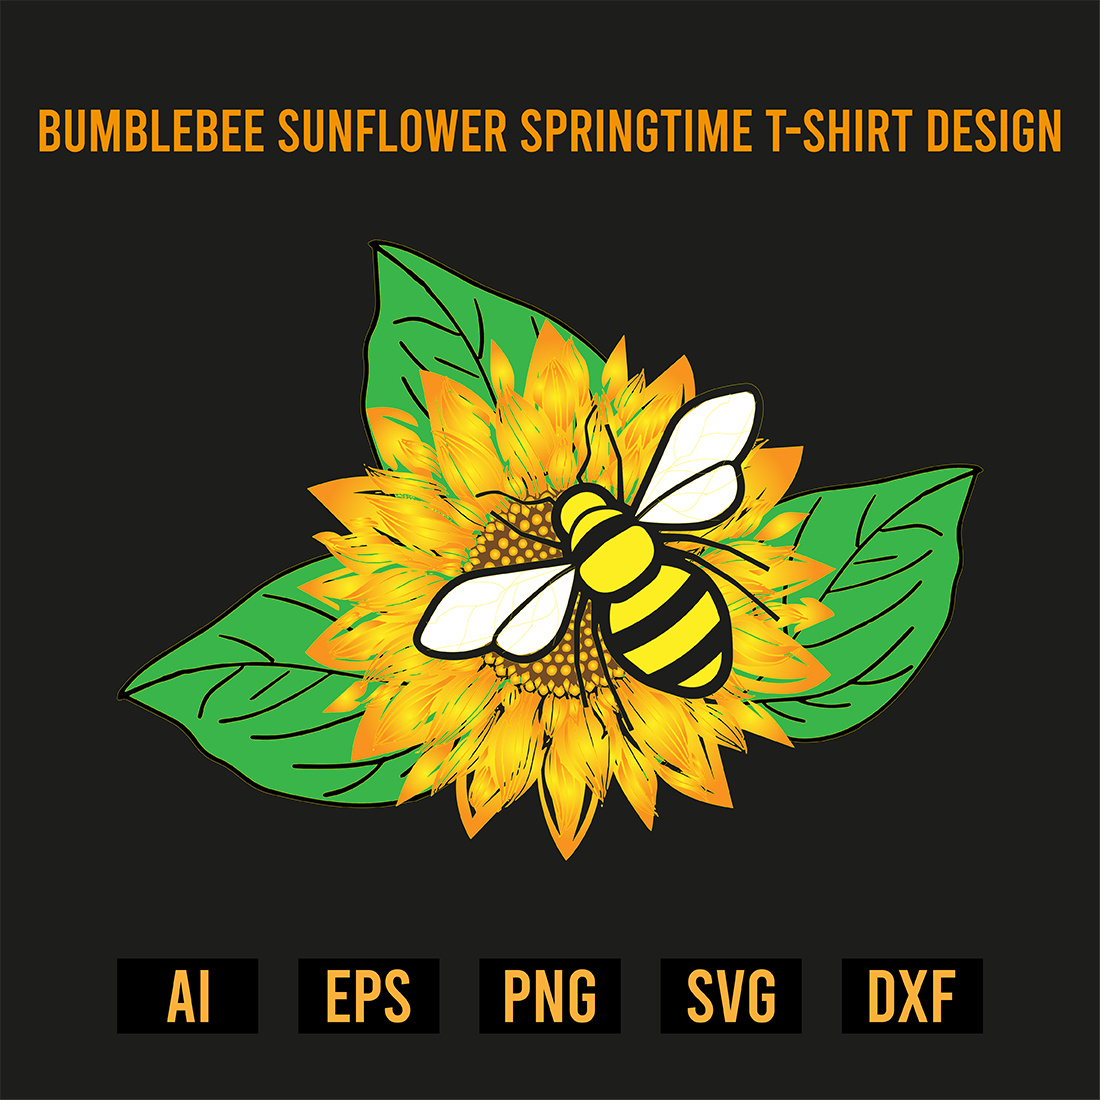 Bumblebee Sunflower Springtime T- Shirt Design cover image.